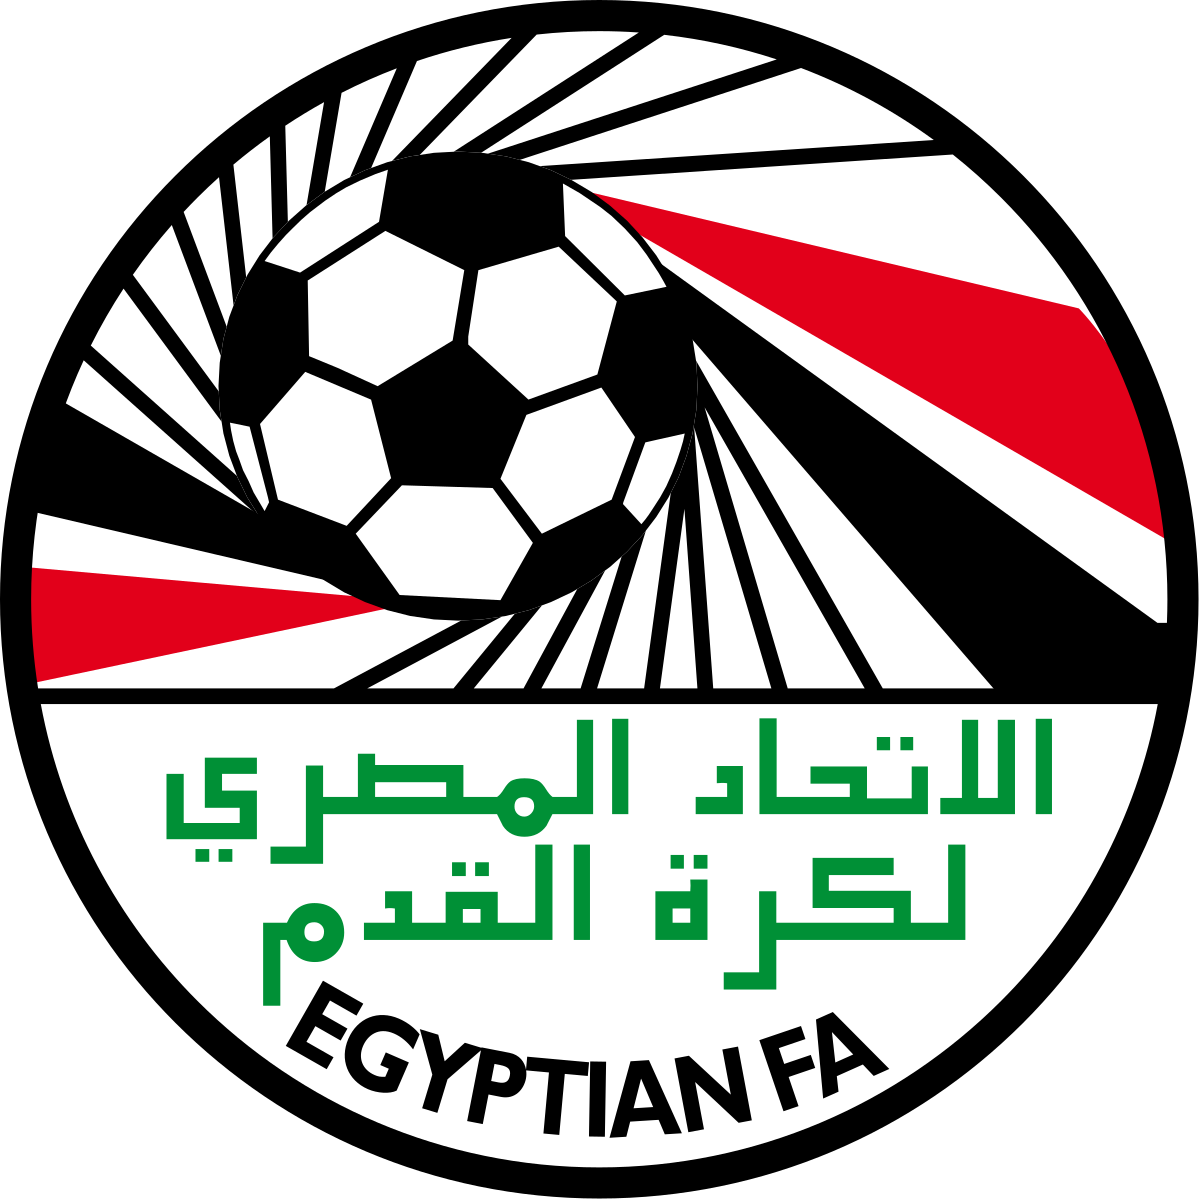 Egypt league cup